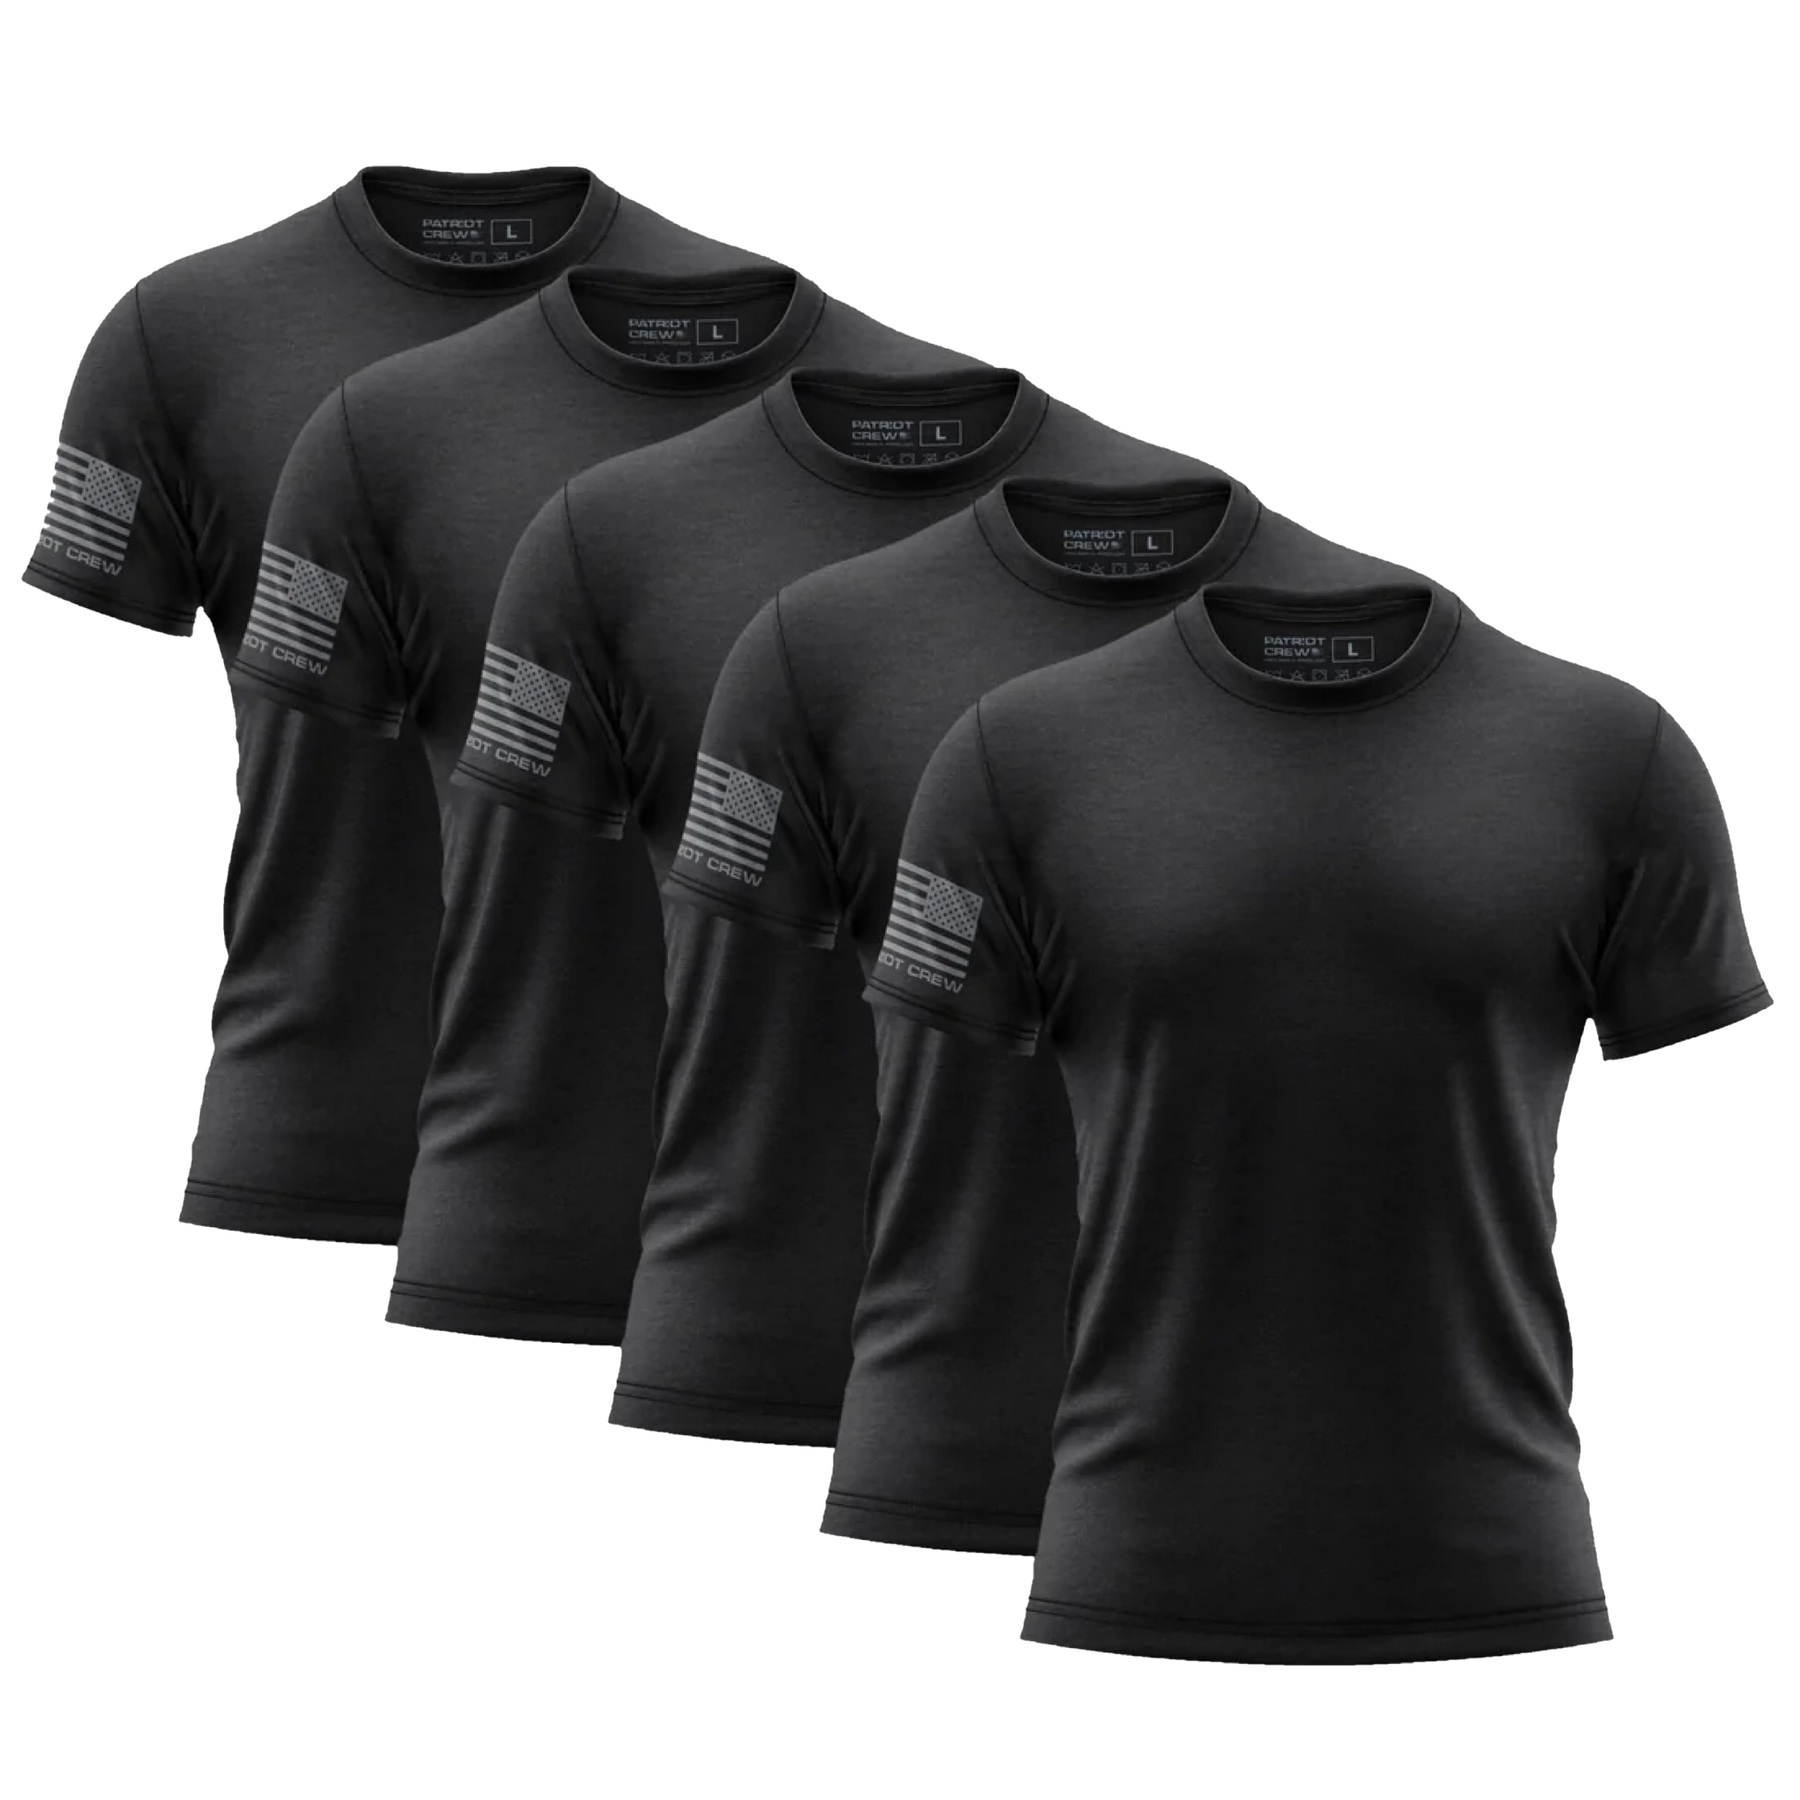 All Black Tee Shirt 5-Pack